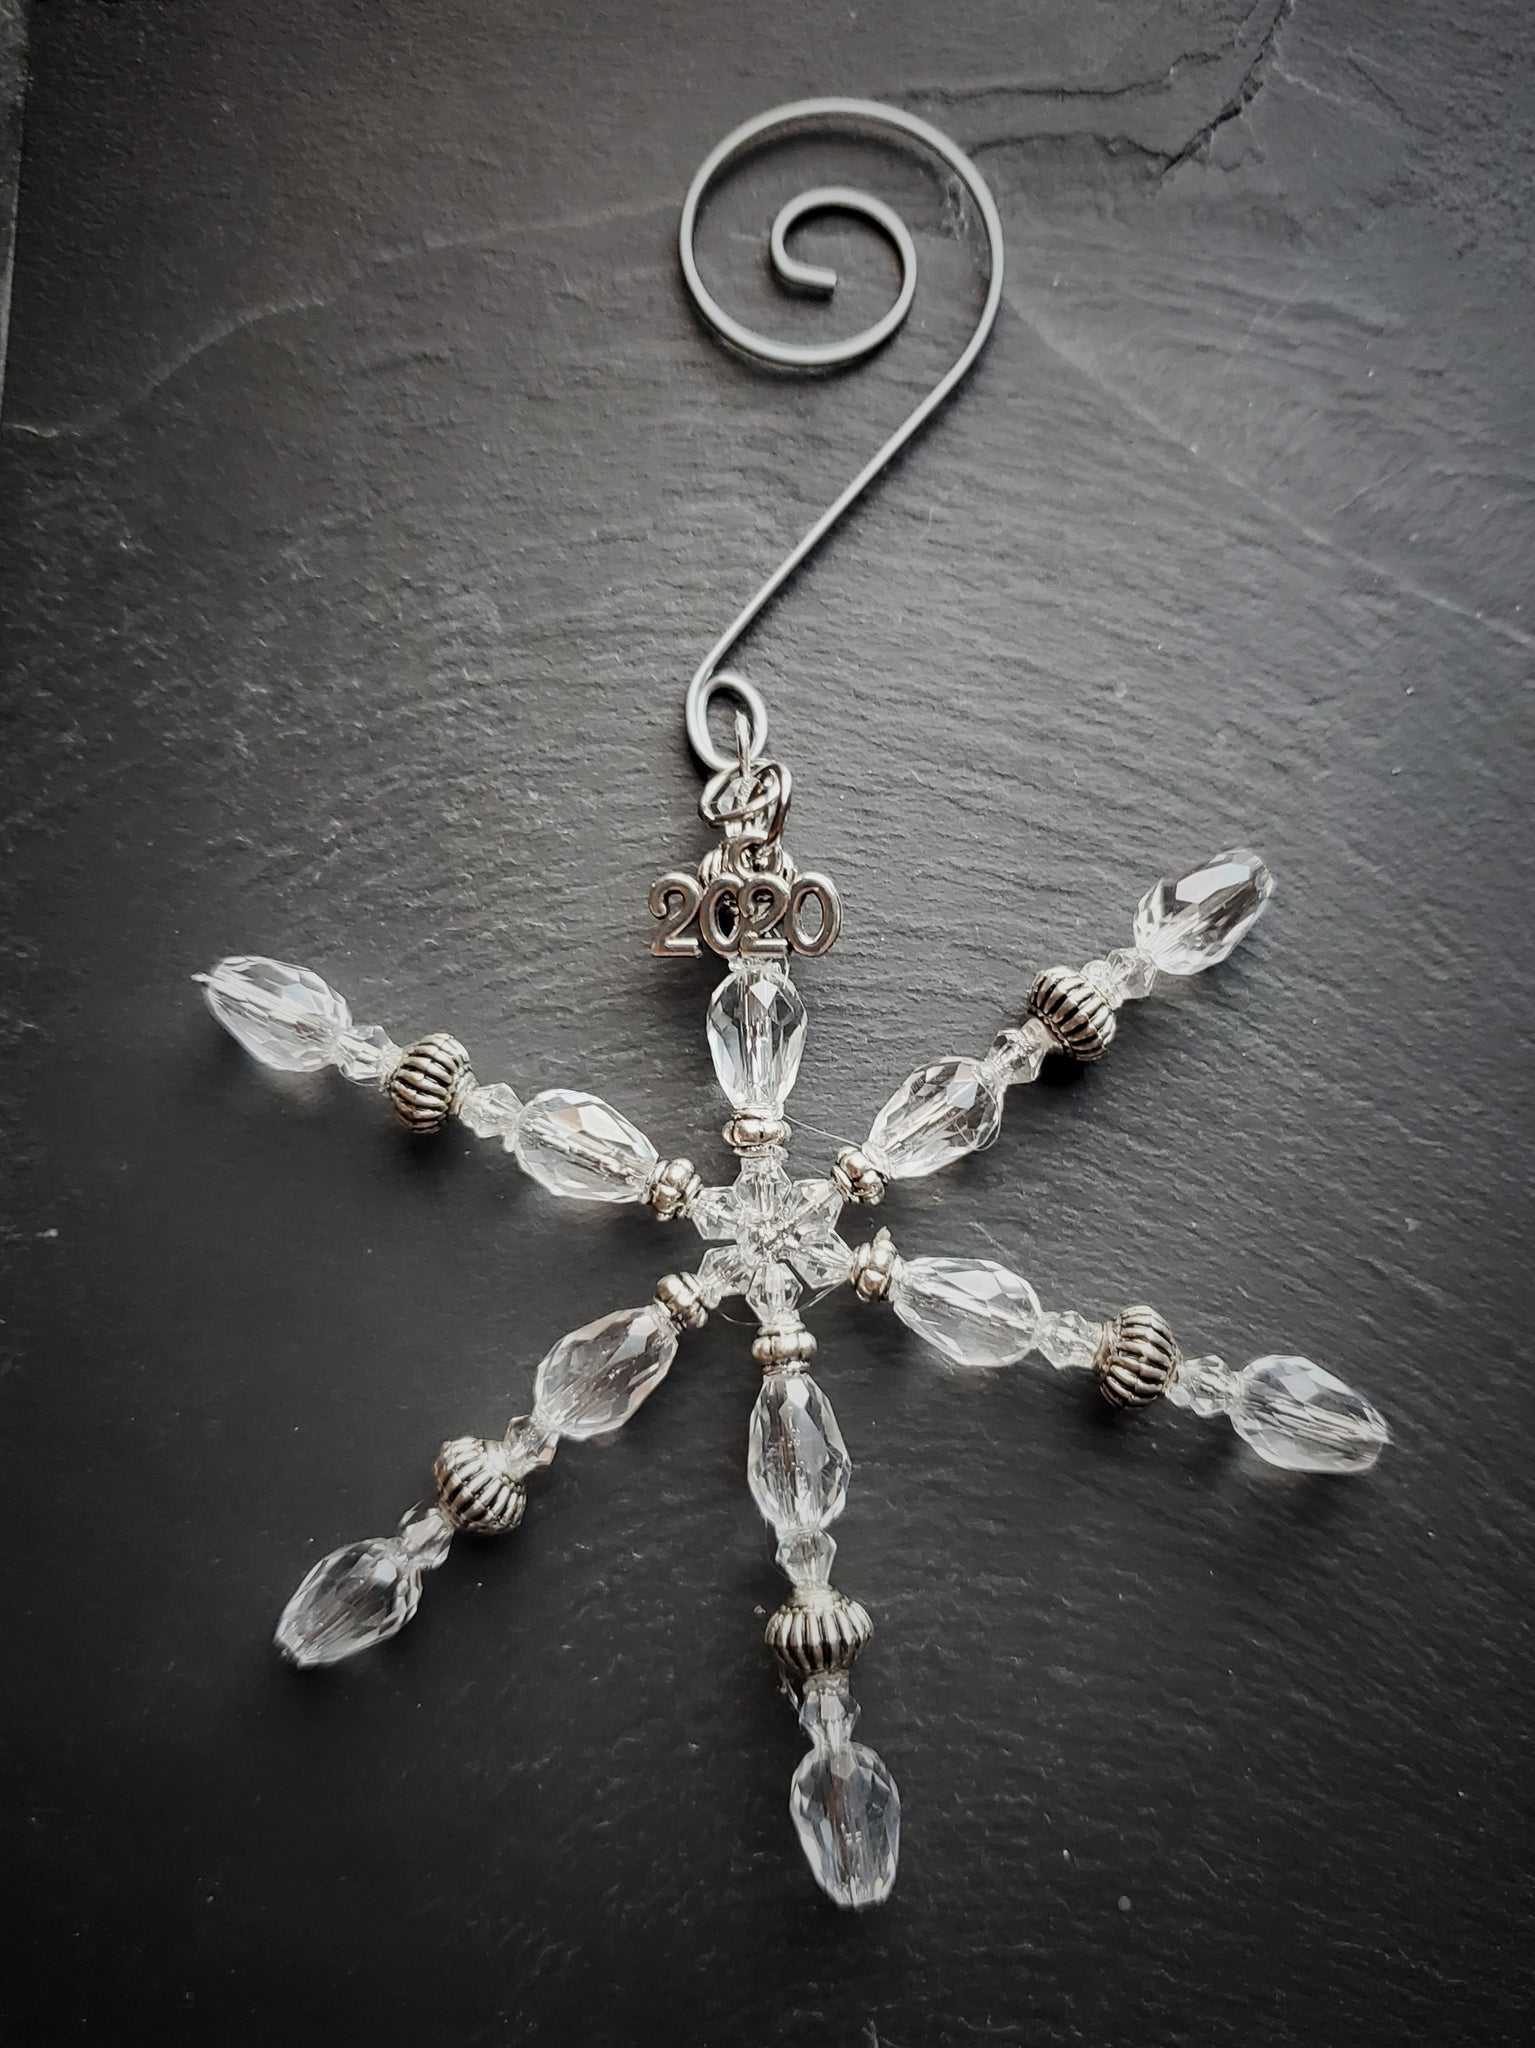 Crystal Teardrop Snowflake Ornament Handmade Gift Stocking Stuffer